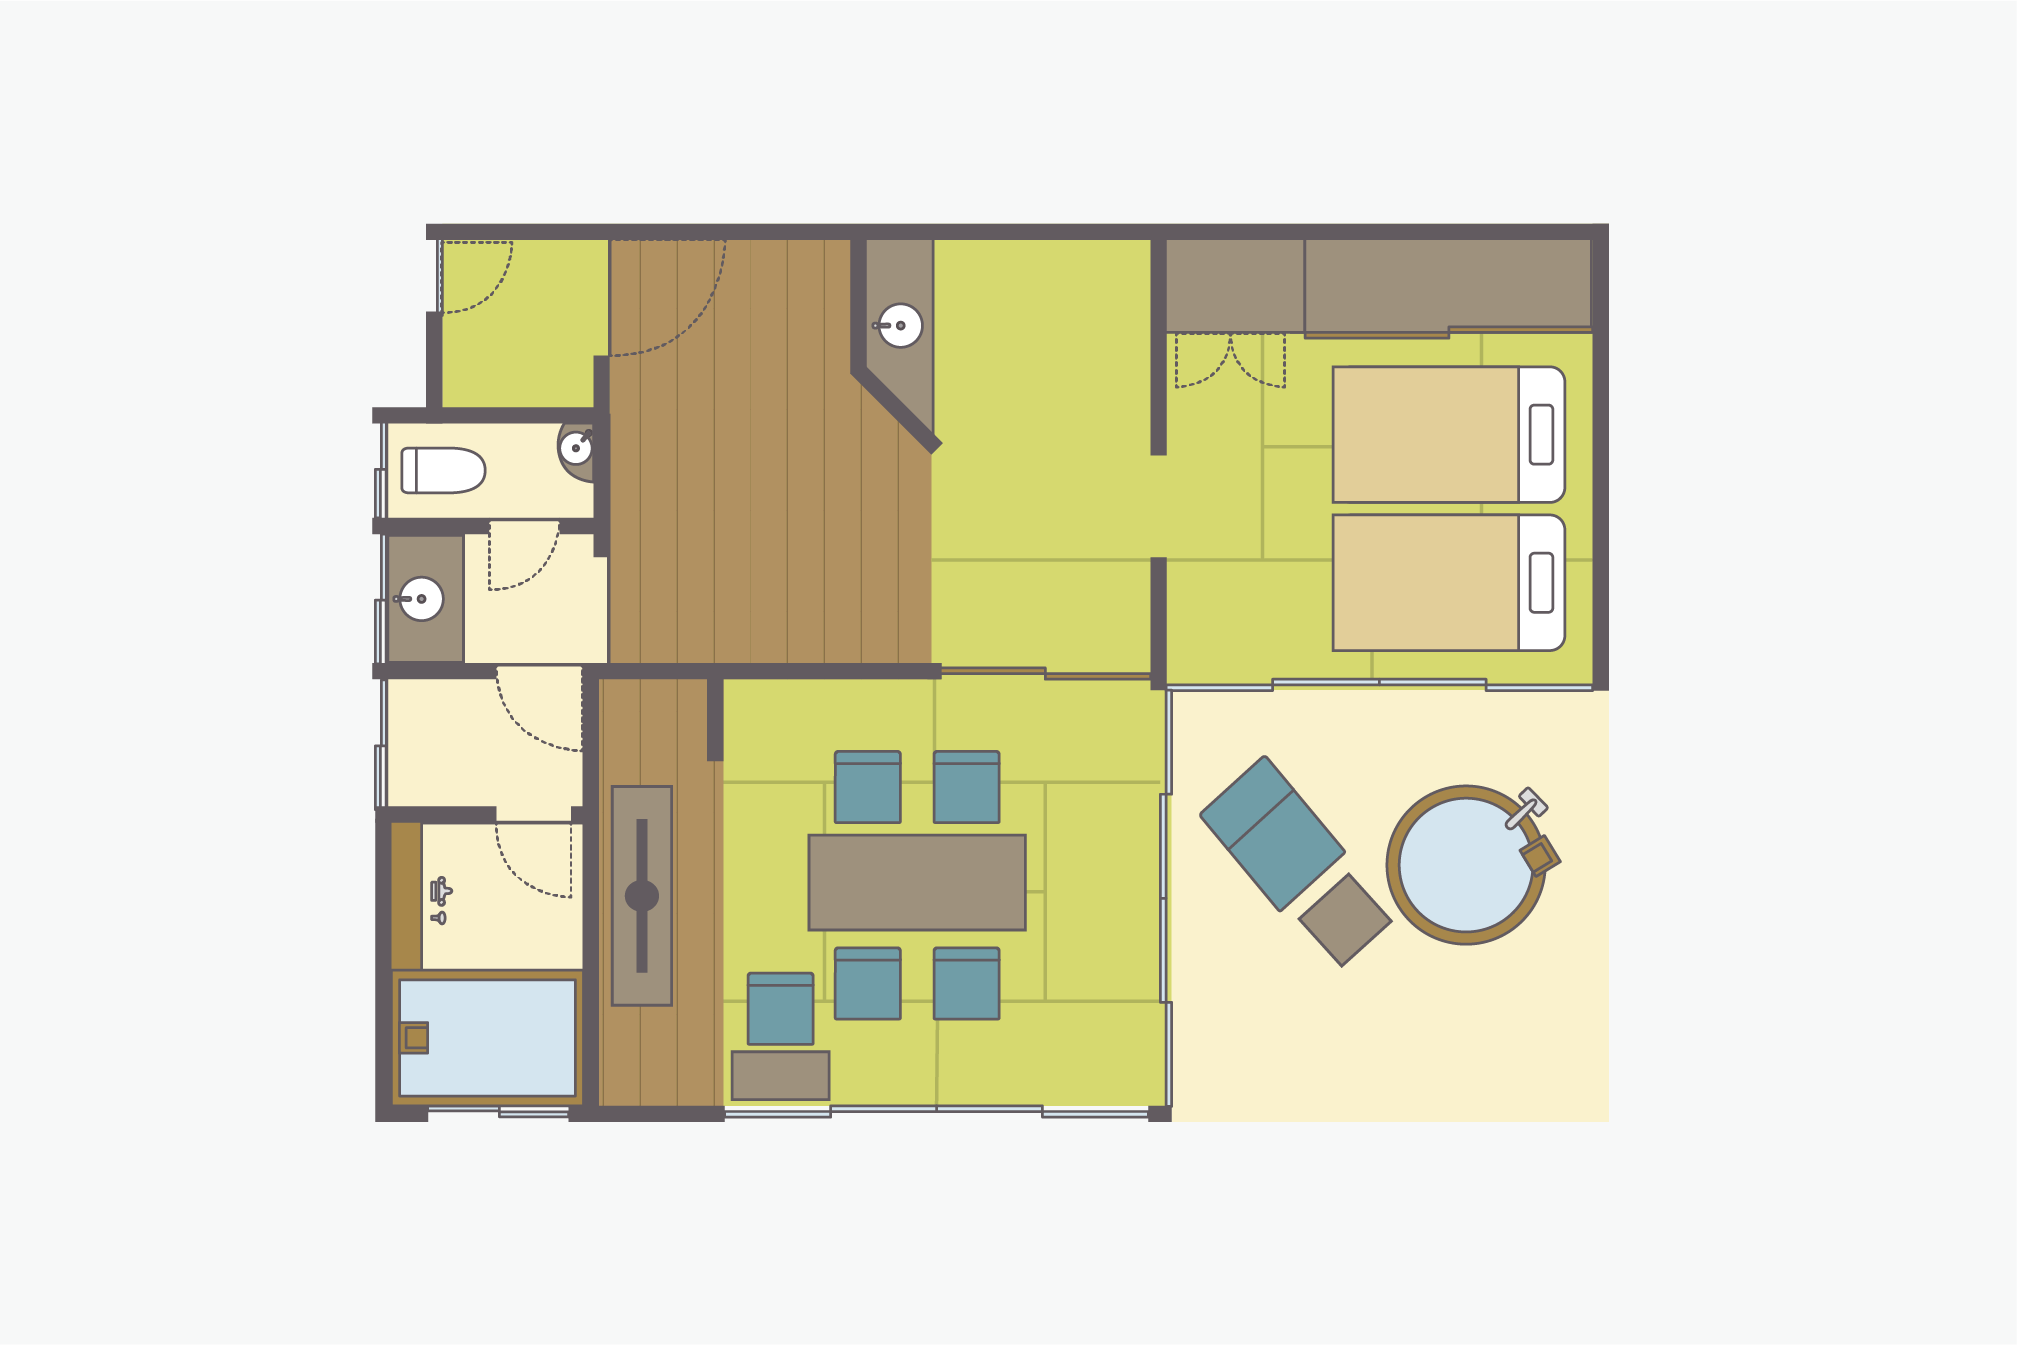 Kantei layout